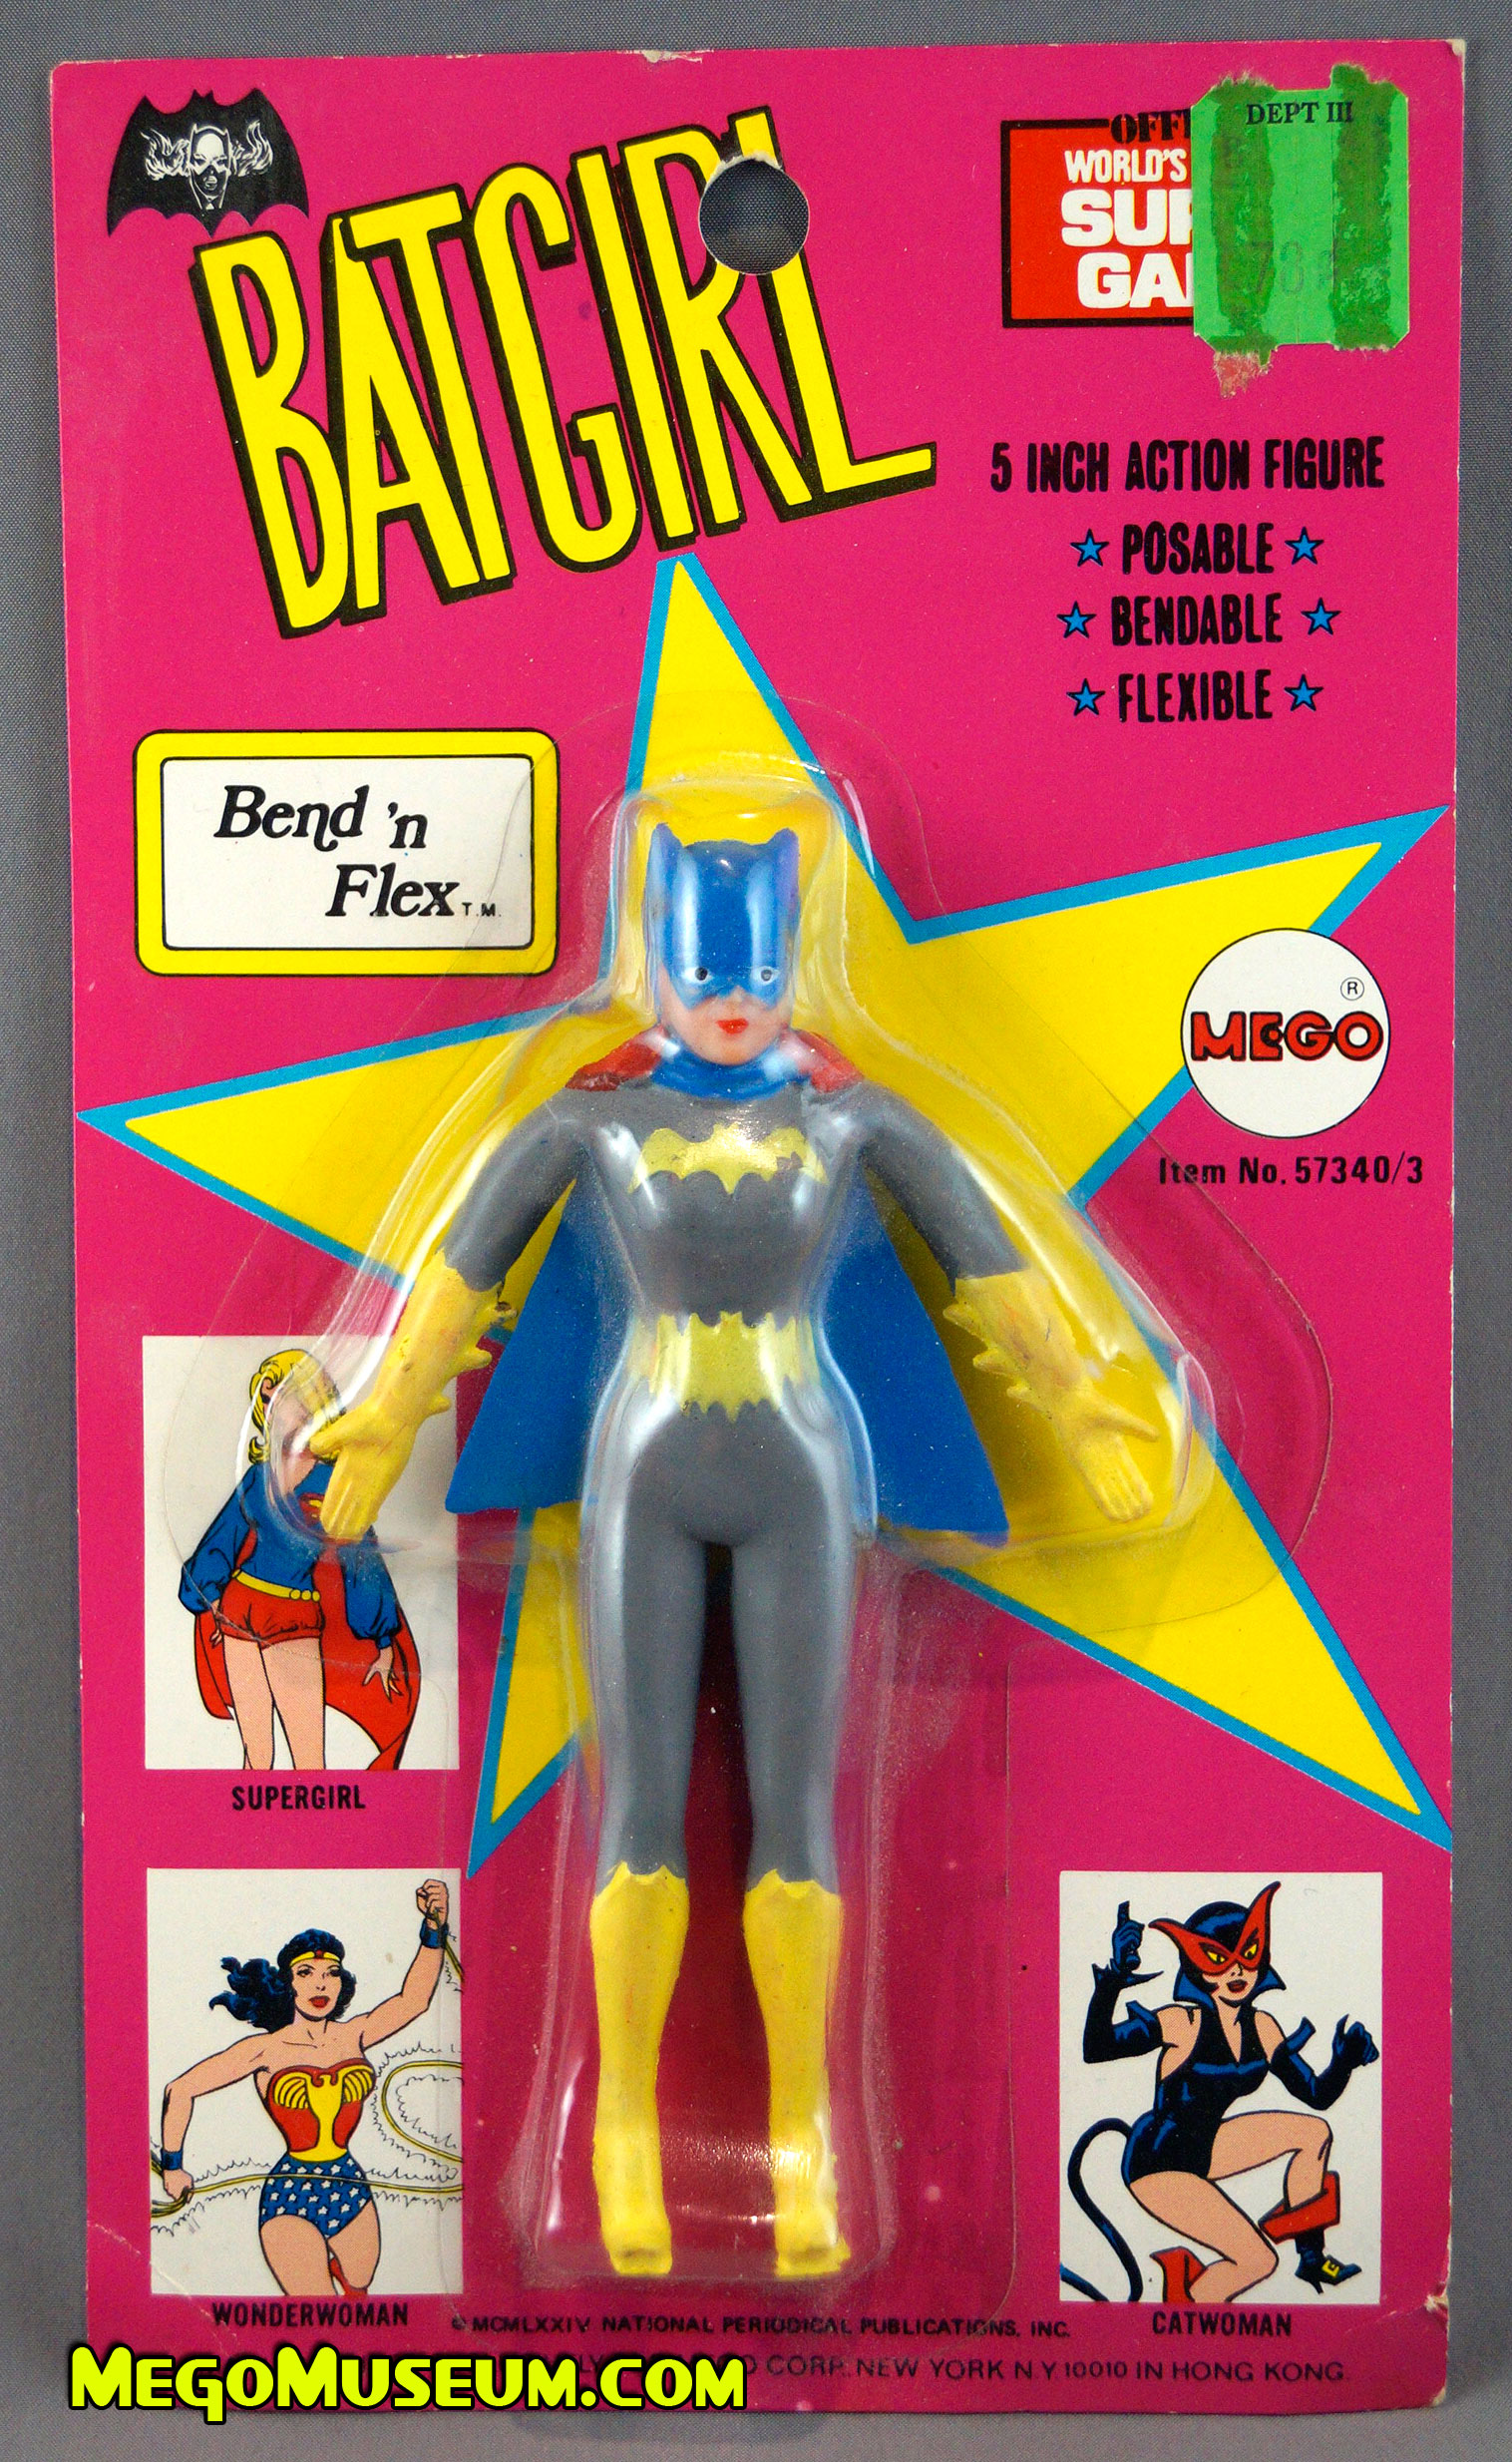 Mego Batgirl Bend 'N Flex Supergals Card from 1974